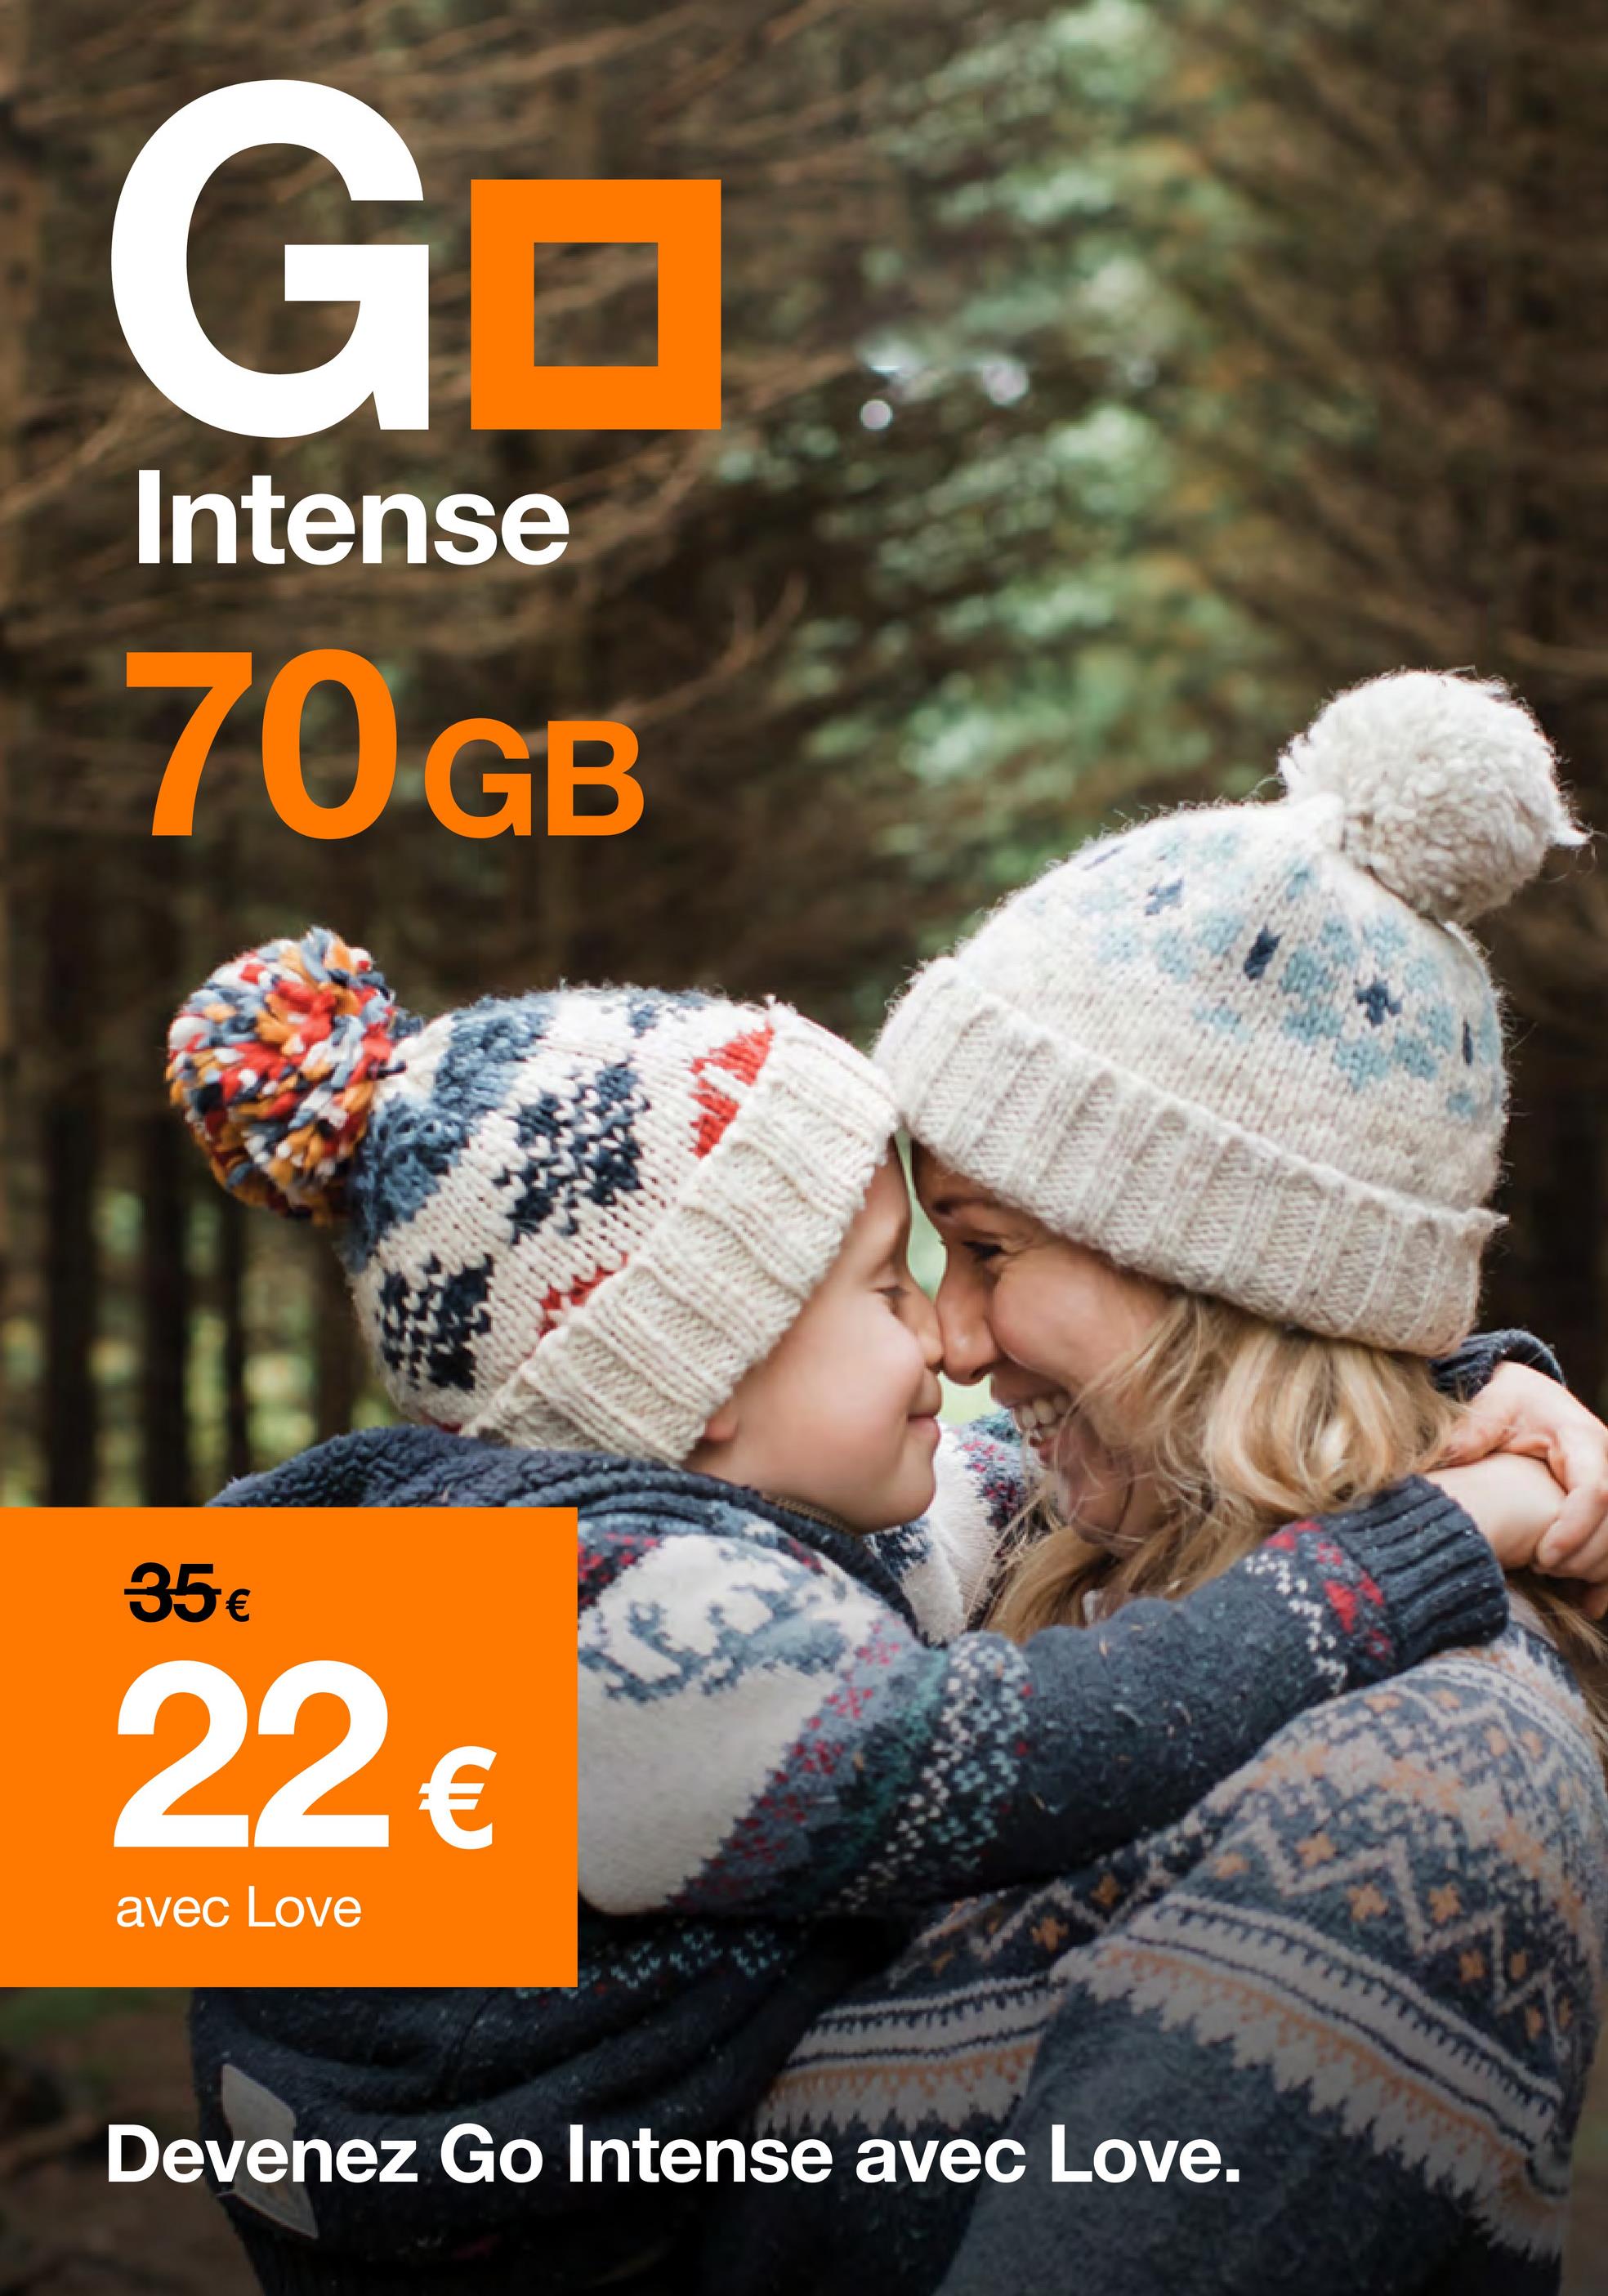 Go
Intense
70 GB
35€
22€
avec Love
Devenez Go Intense avec Love.